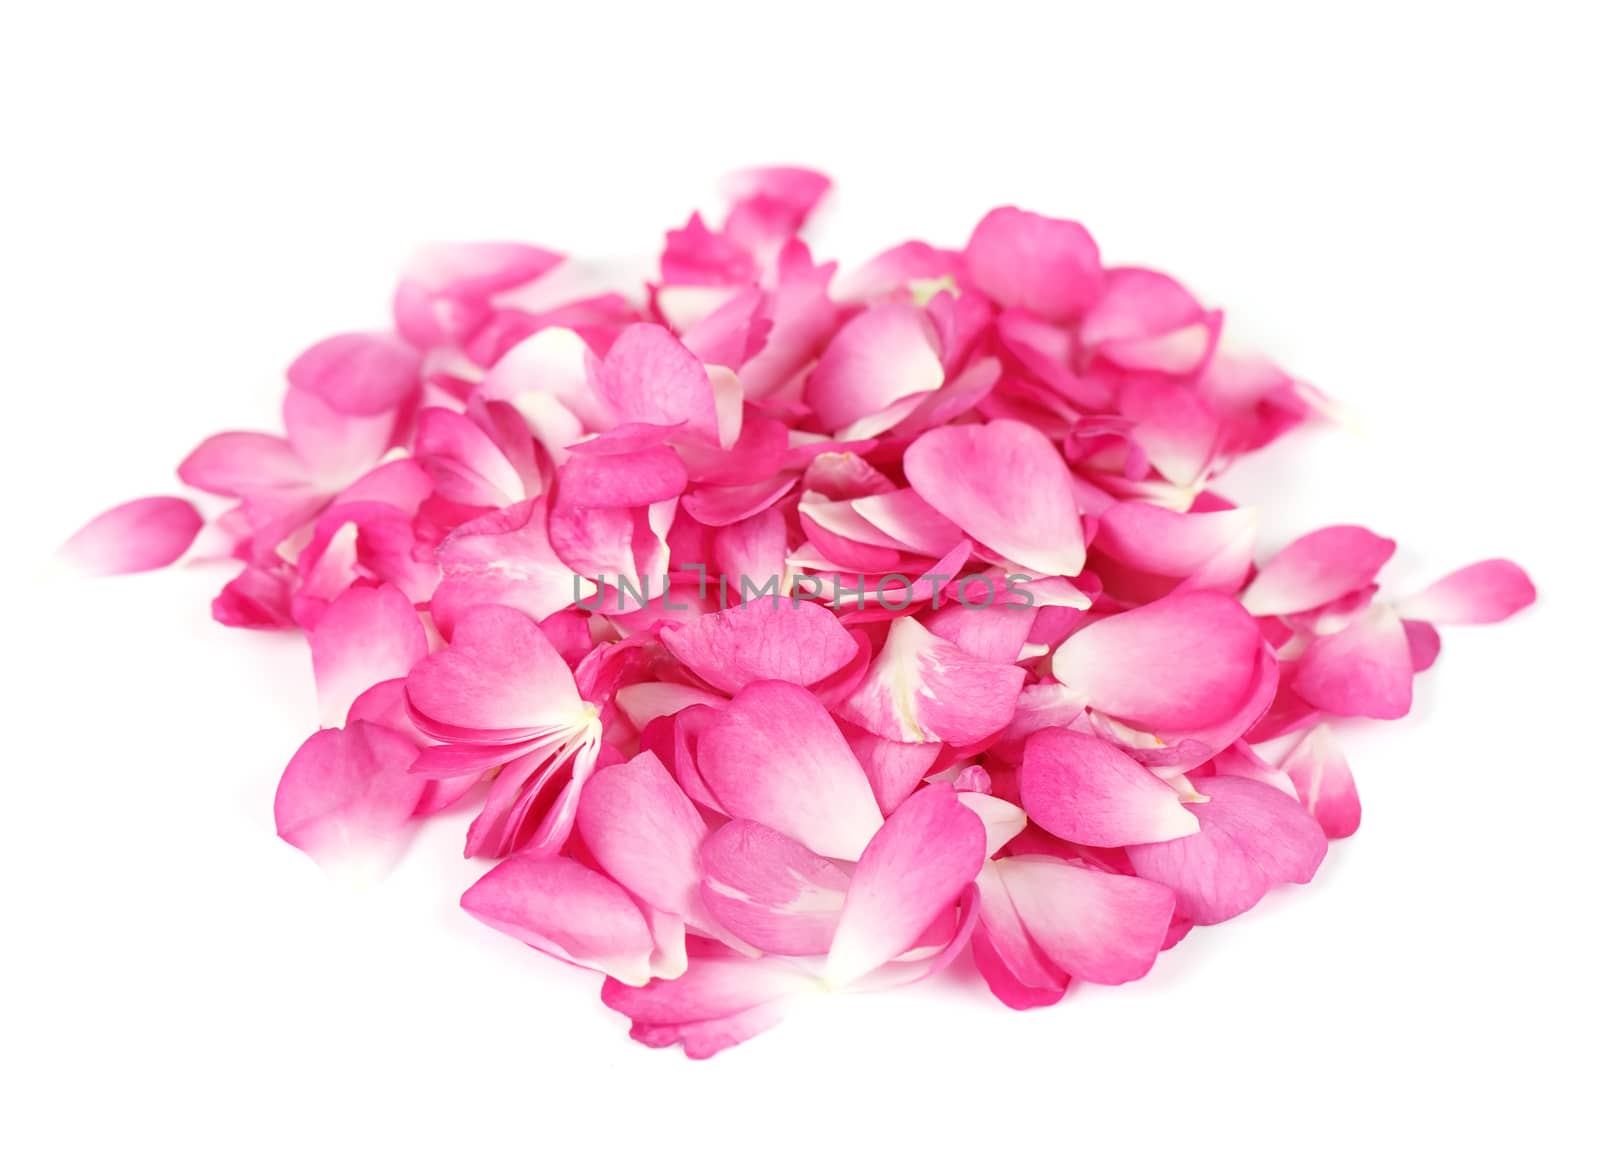 Pink rose petals on white